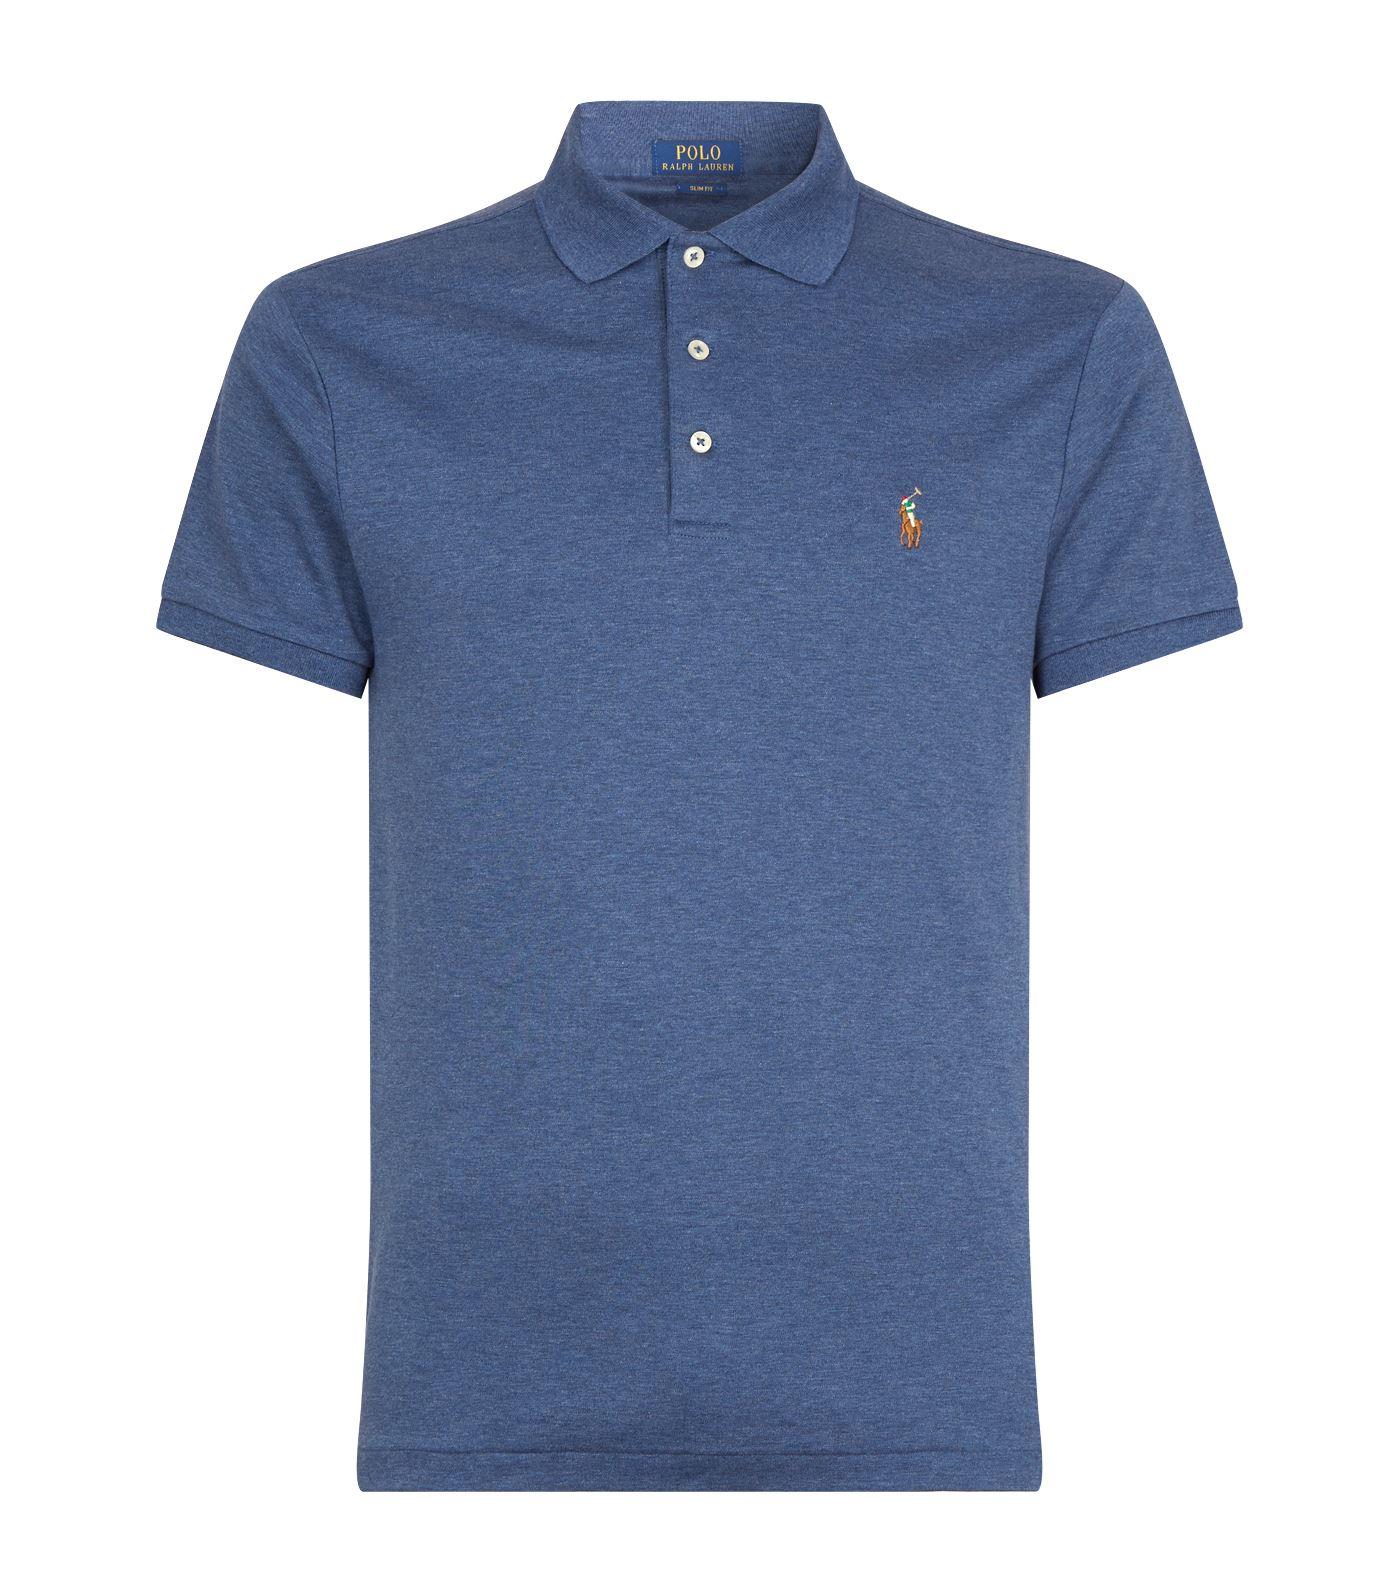 Polo Ralph Lauren Pima Cotton Polo Shirt in Blue for Men - Lyst